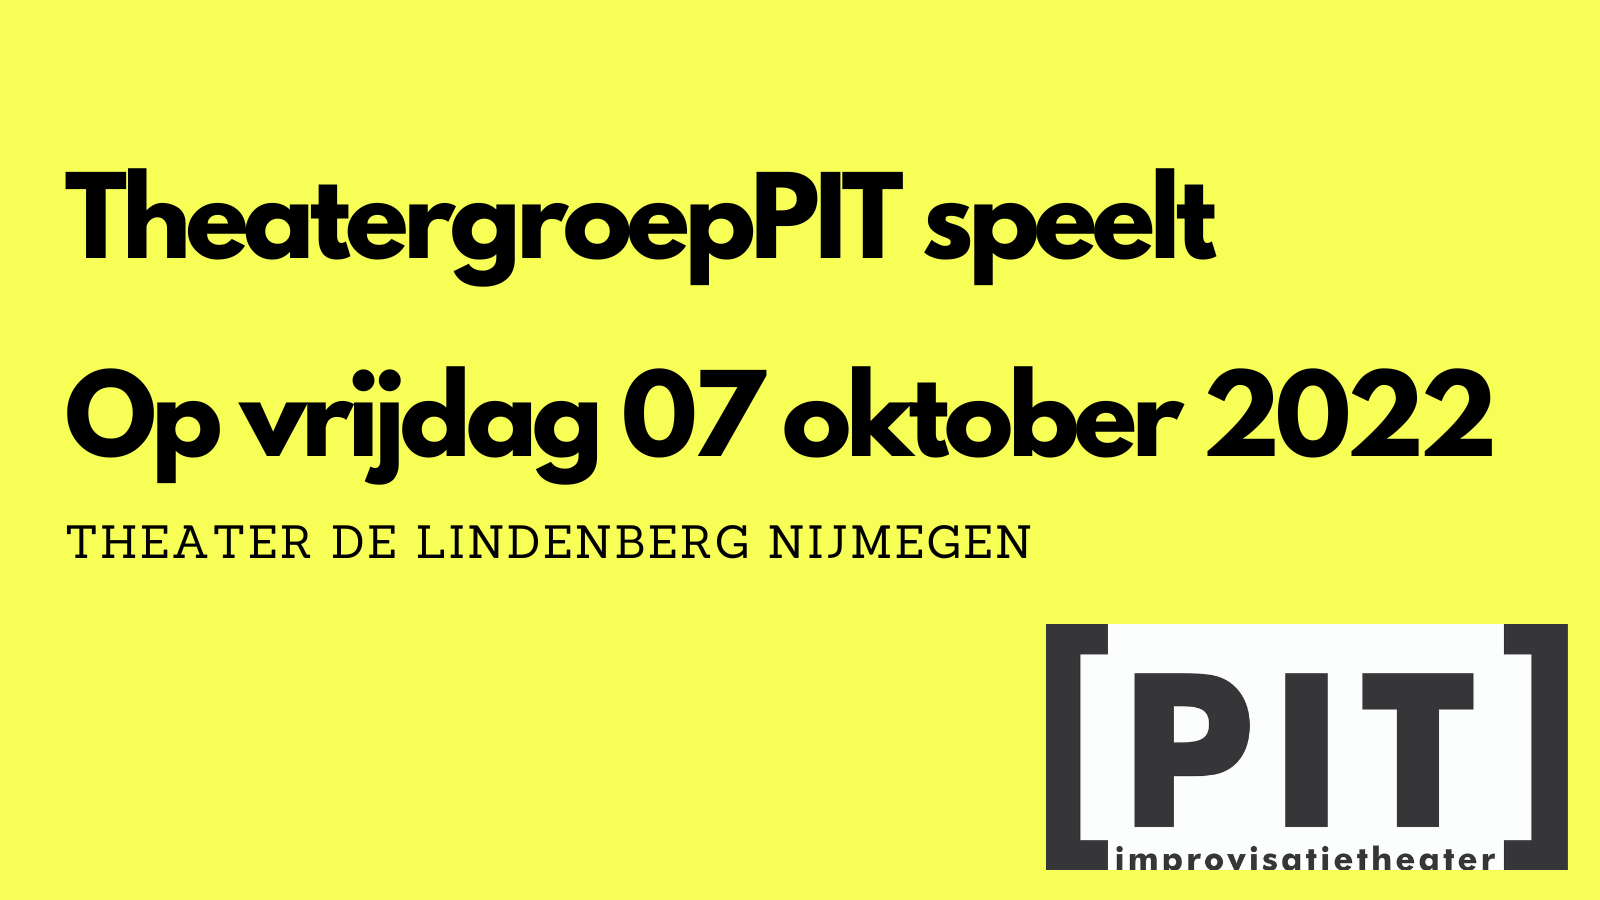 TheatergroepPIT speelt op vrijdag 07 oktober 2022